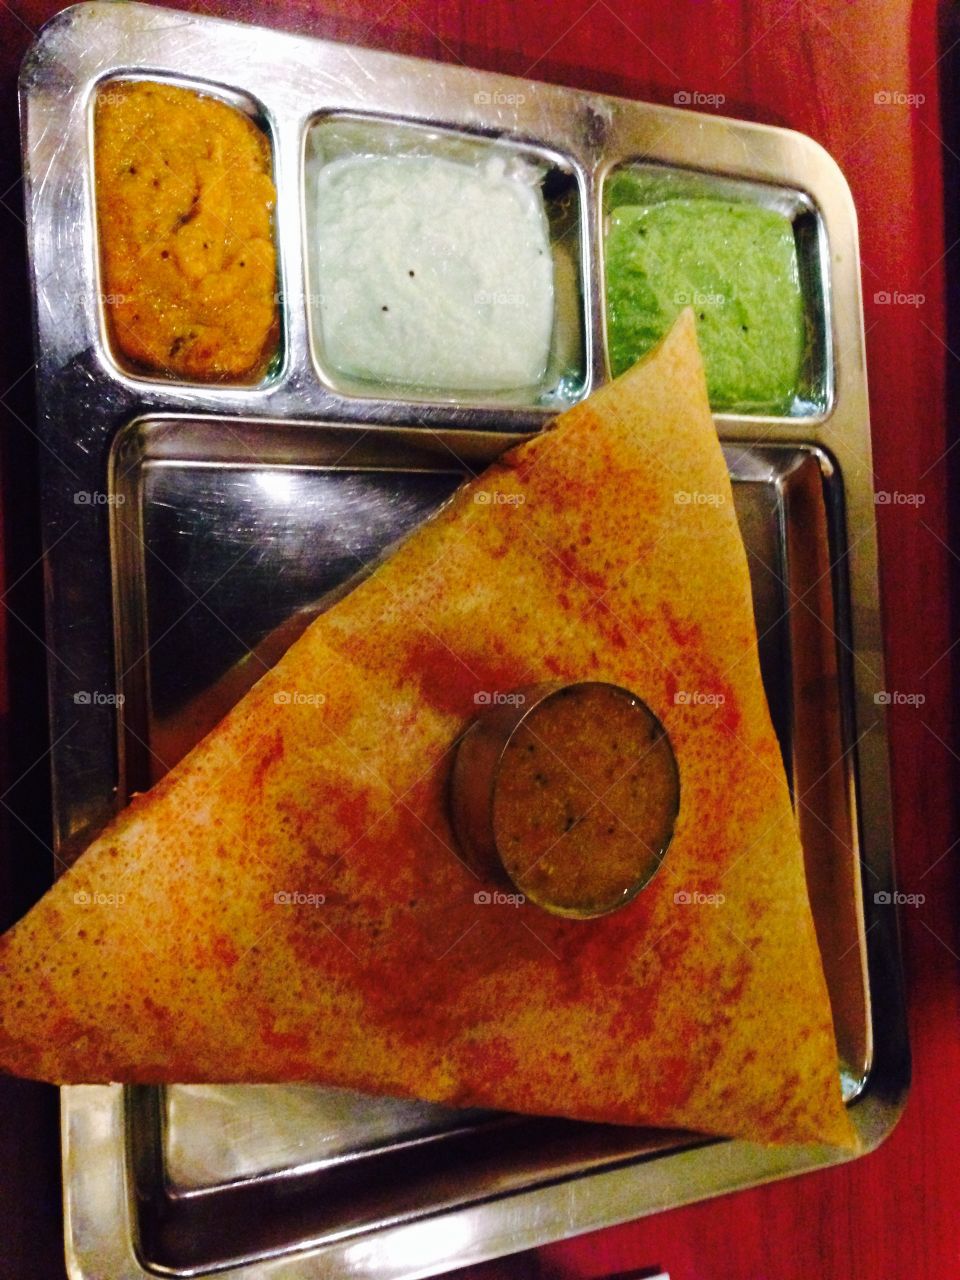 Dosa love
Colorful food
Tasty 
Yummy 
Indian food ❤️